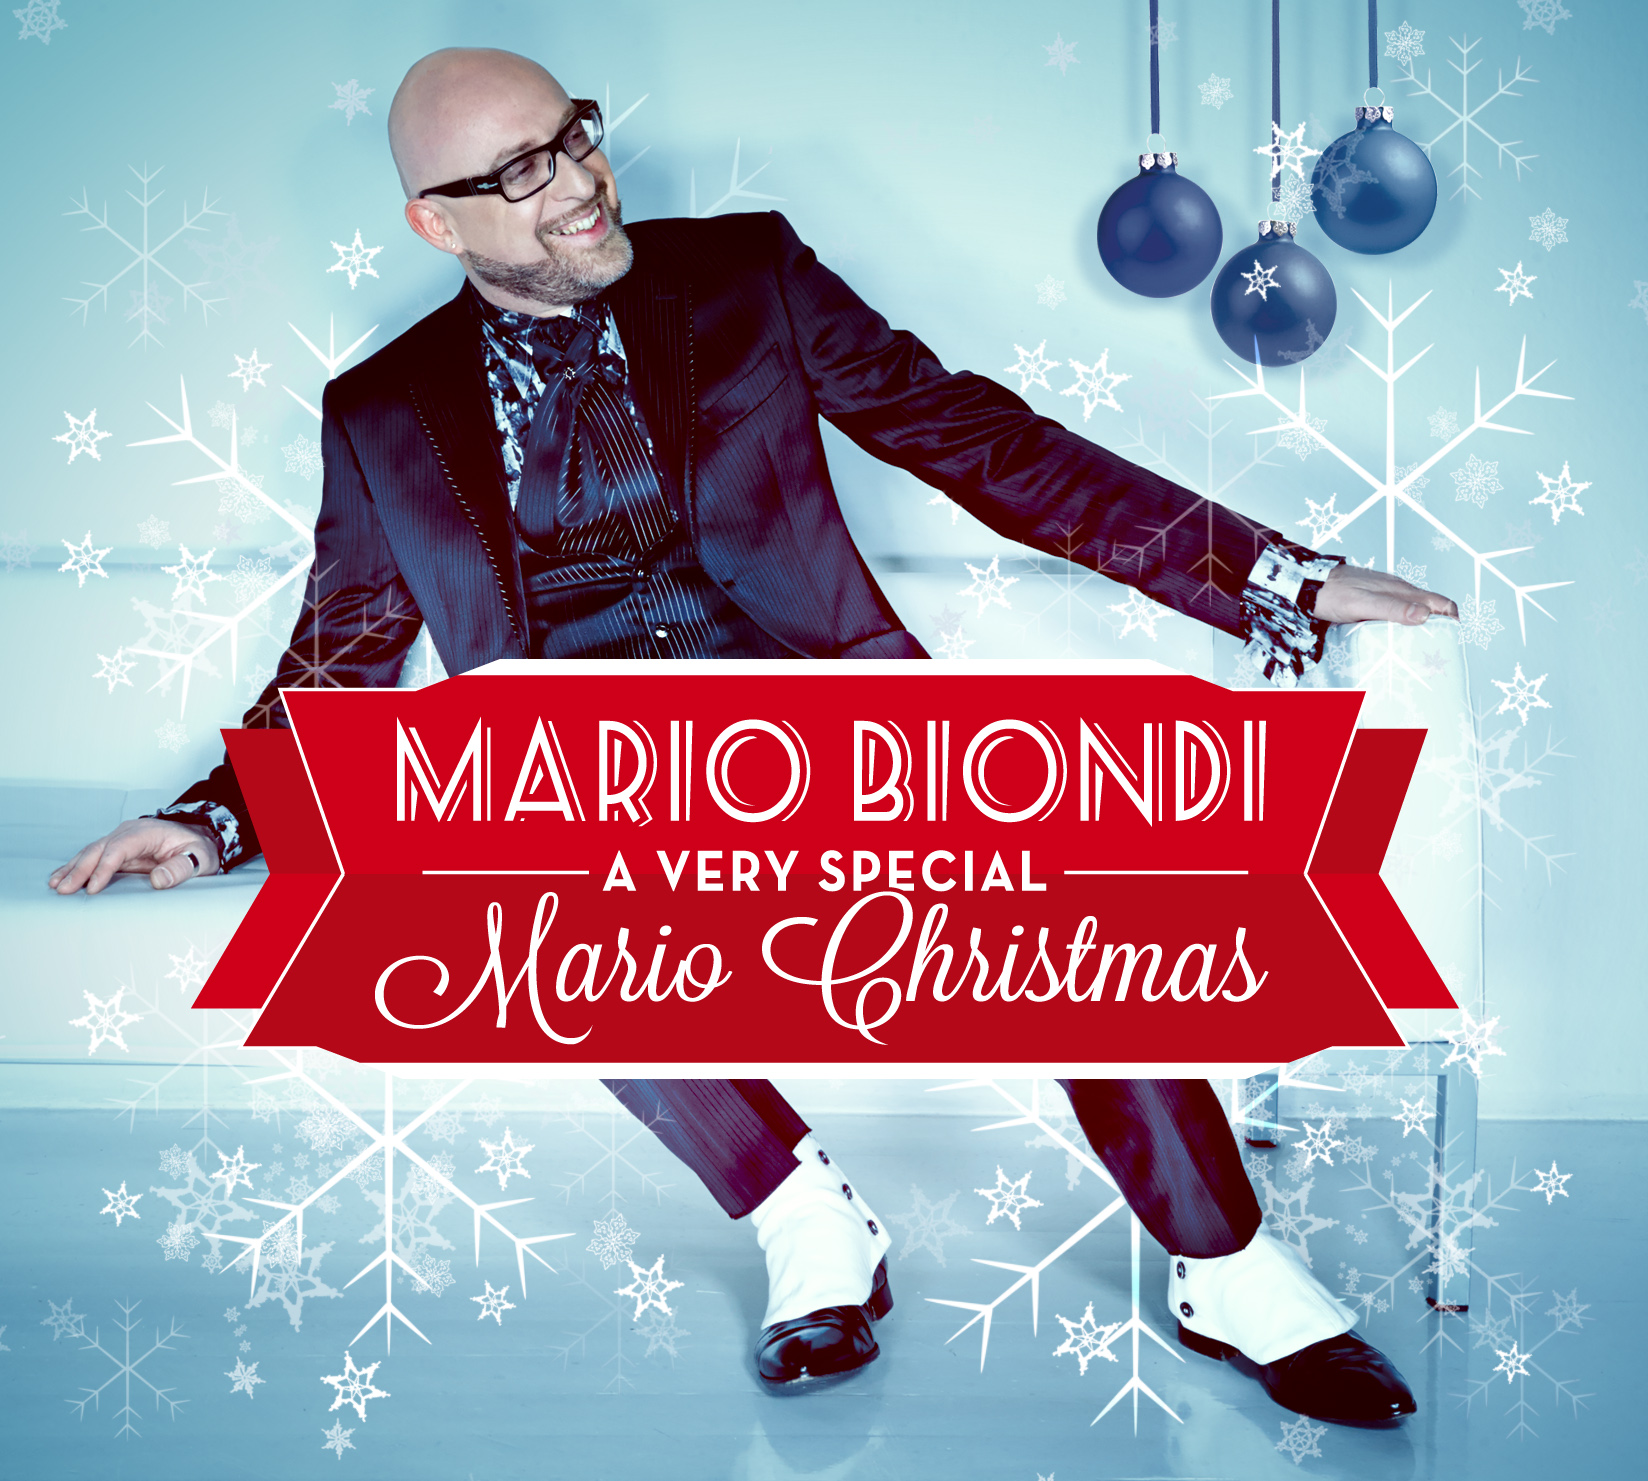 Mario Biondi - A Very Special Mario Christmas